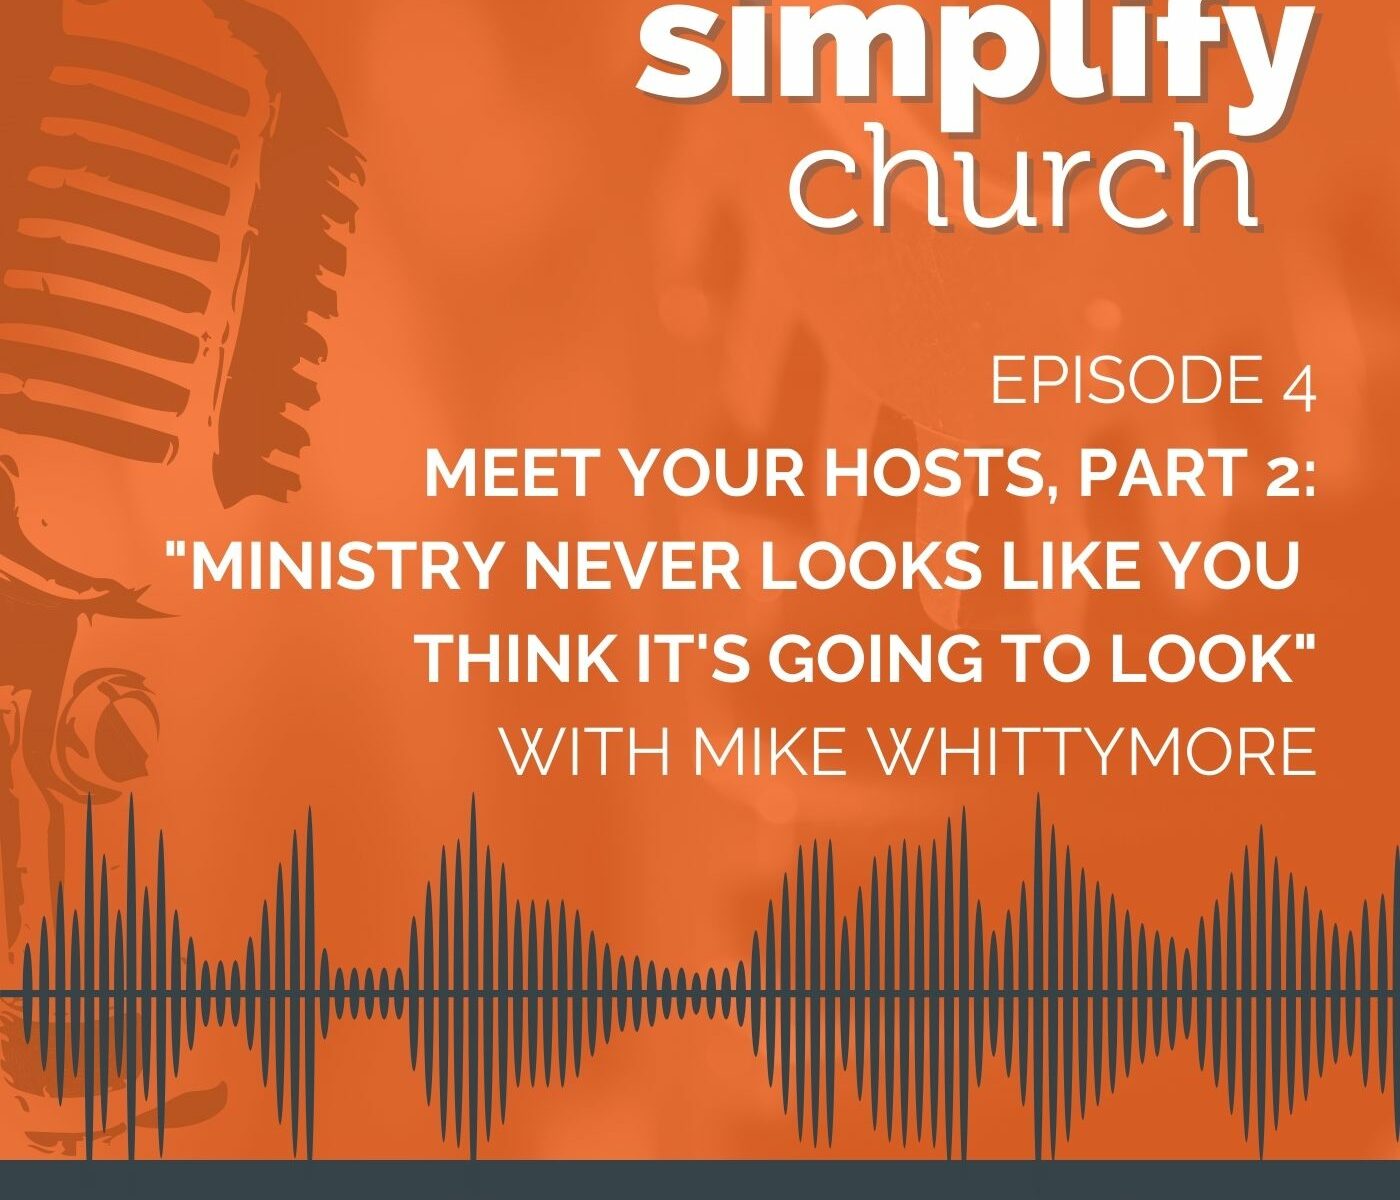 Simplify Church, the podcast